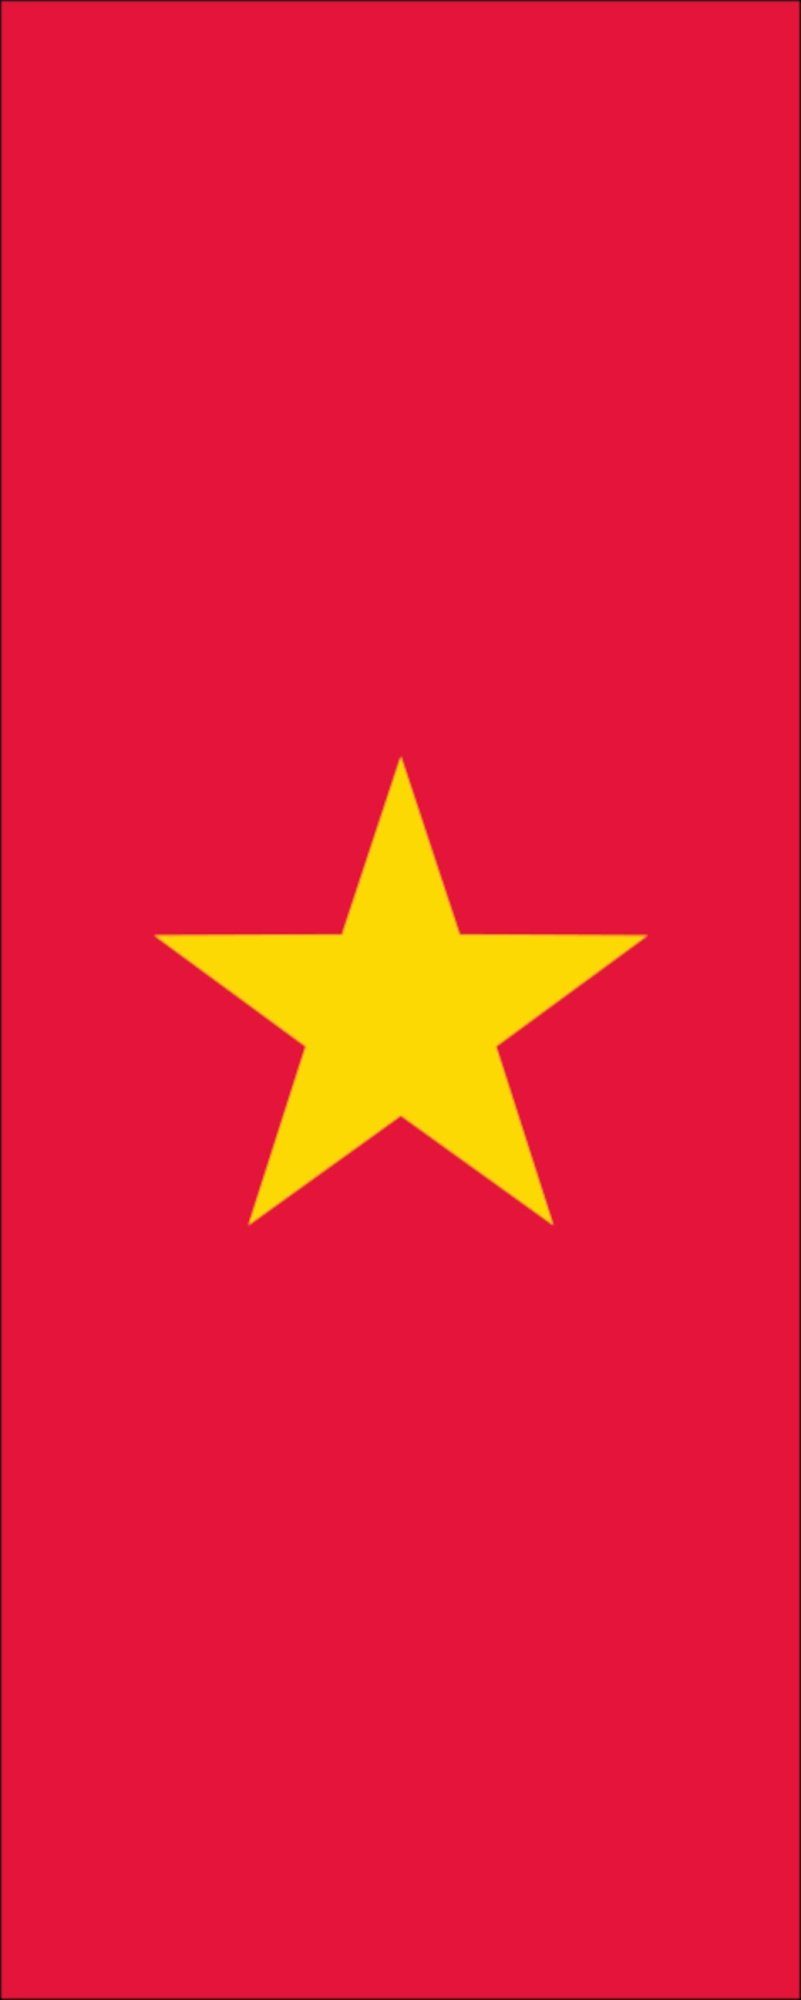 Flagge Vietnam g/m² flaggenmeer Hochformat 110 Flagge